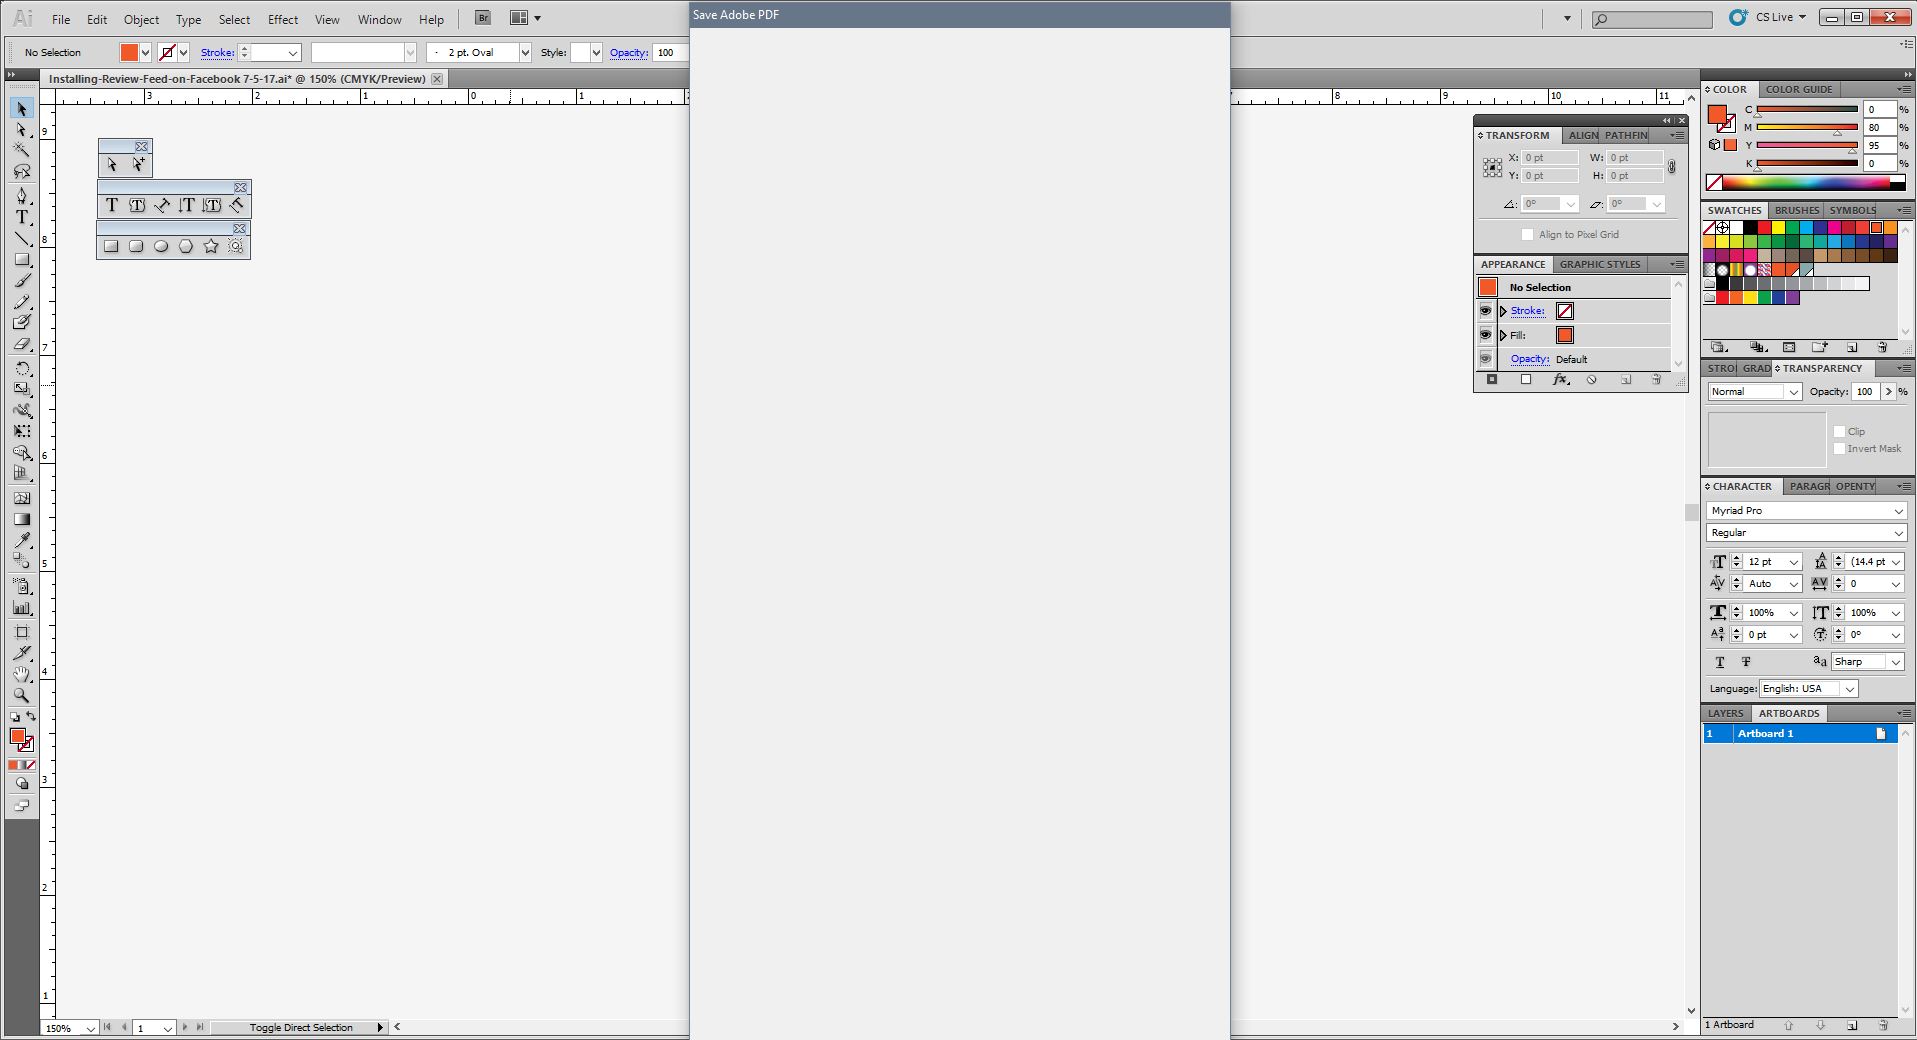 Adobe Illustrator CS5: Windows are blank. Unable t... - Adobe